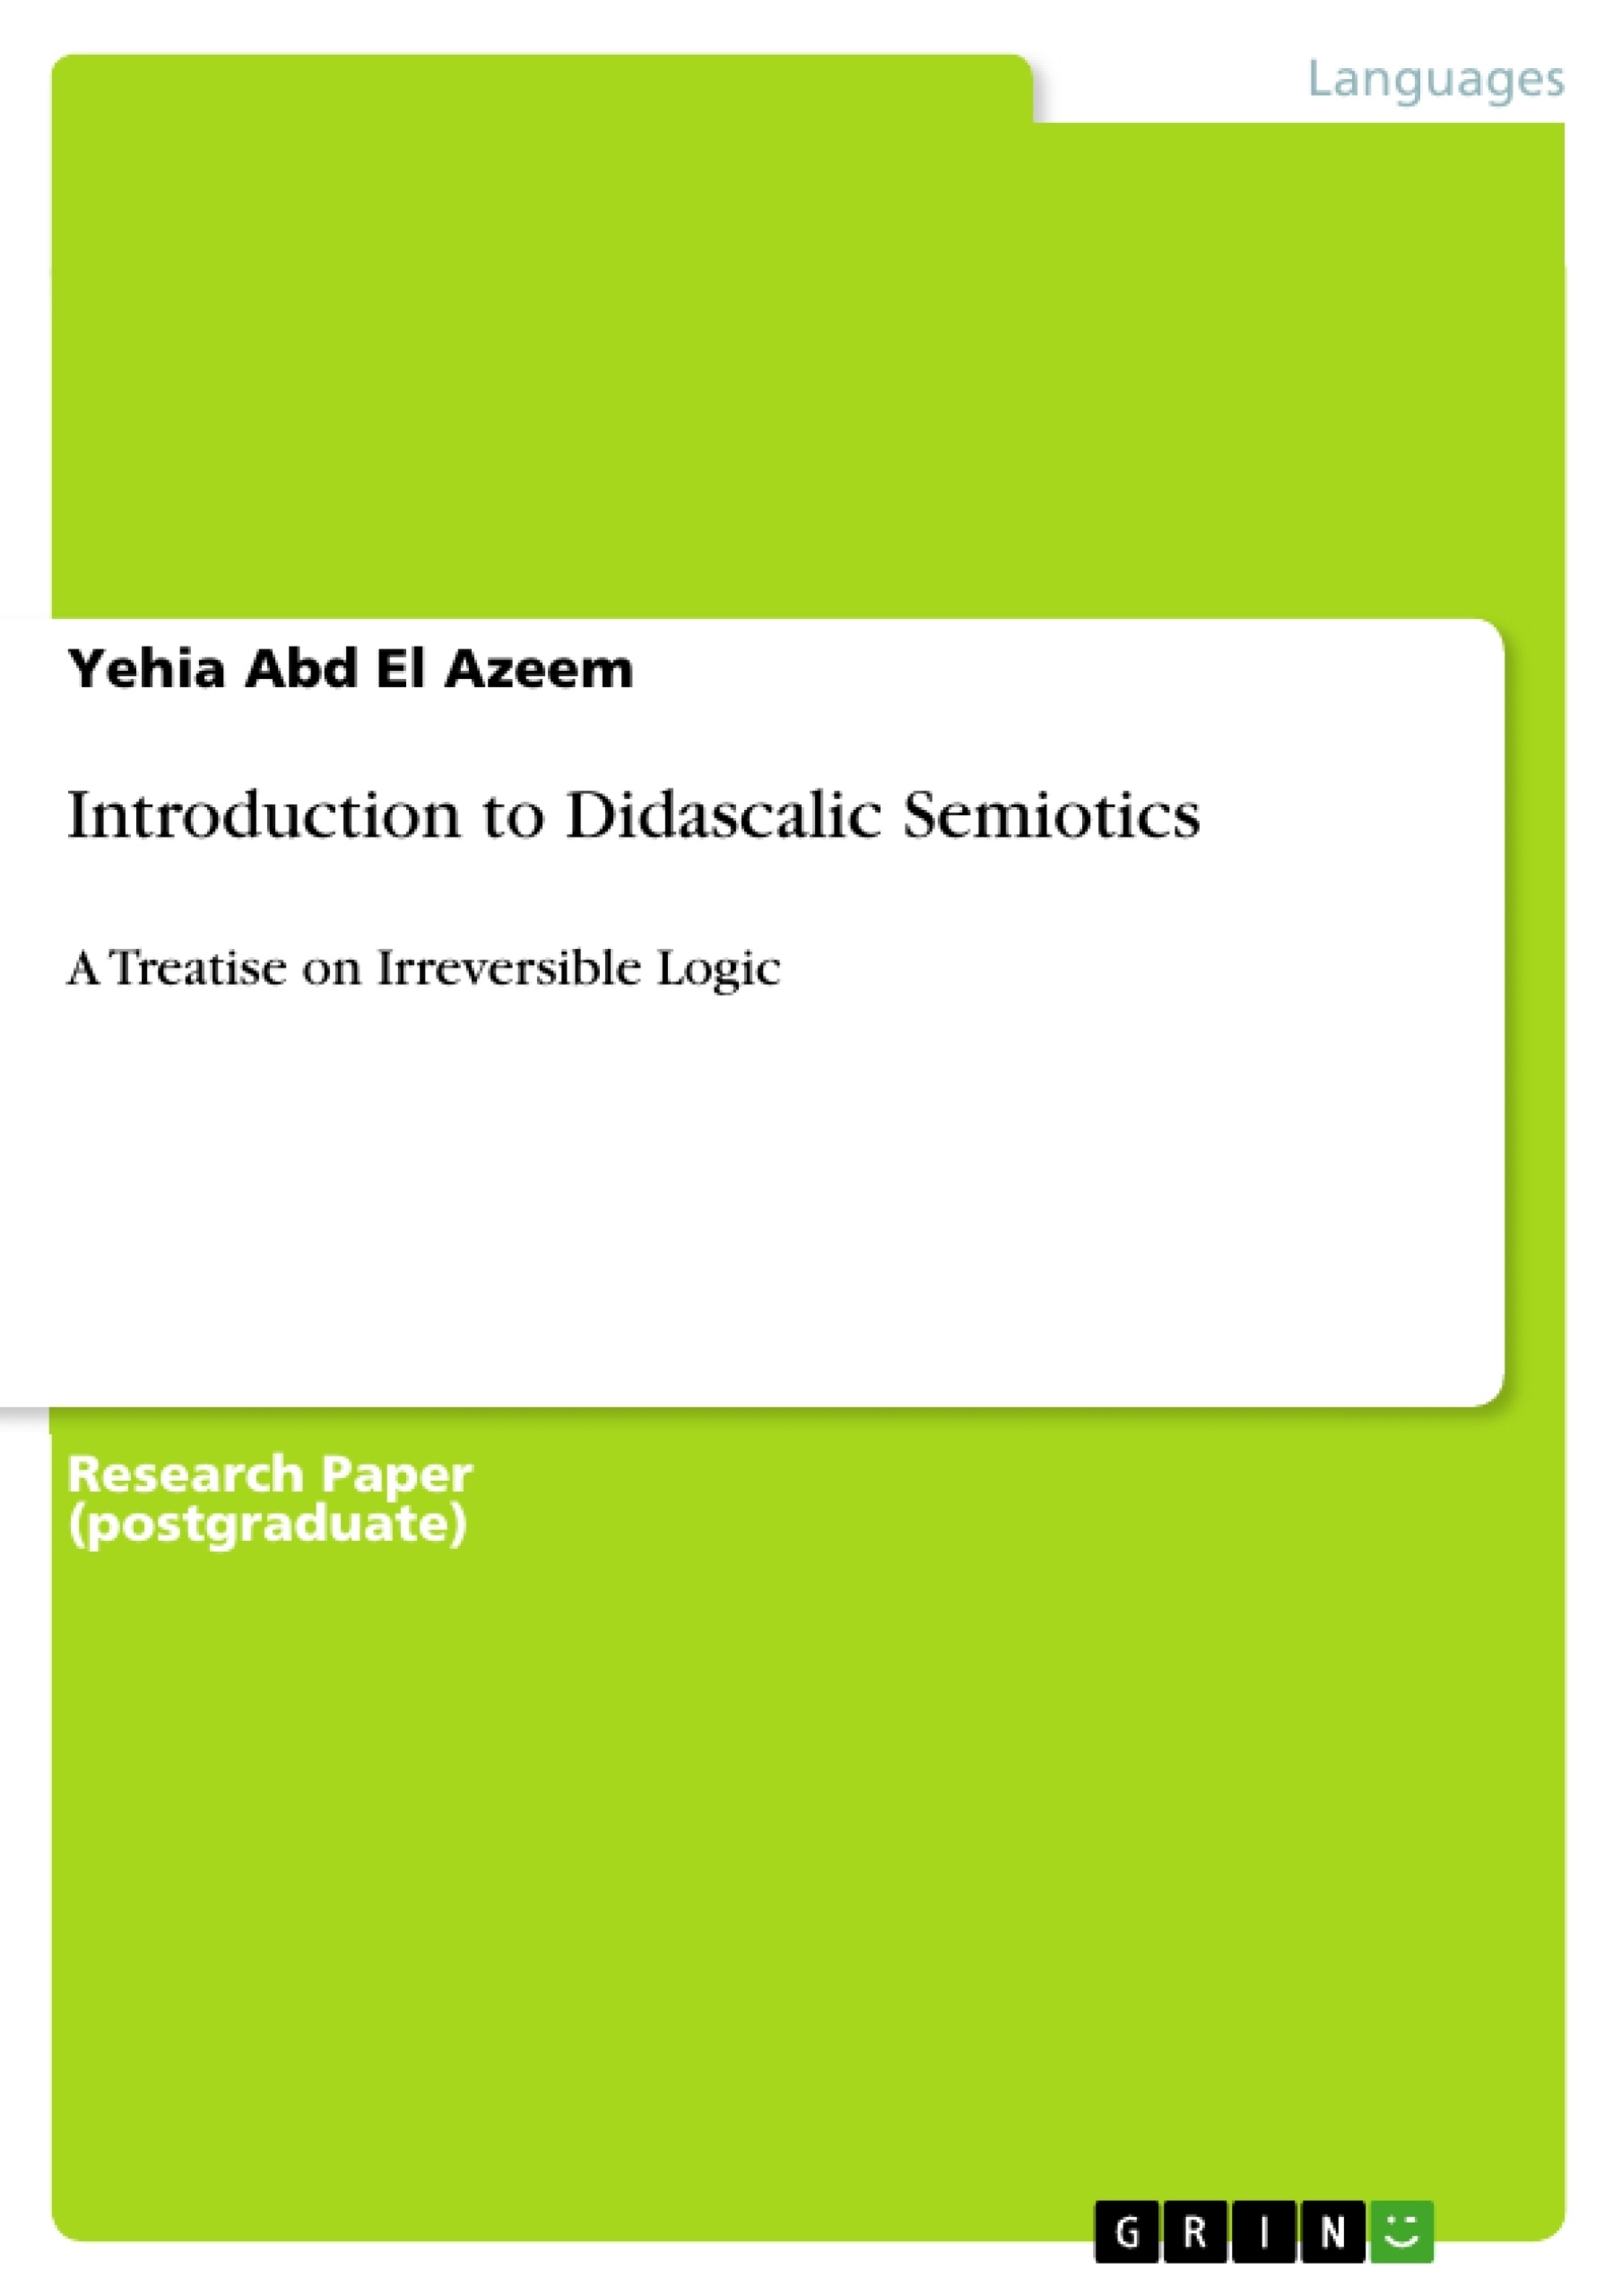 Title: Introduction to Didascalic Semiotics